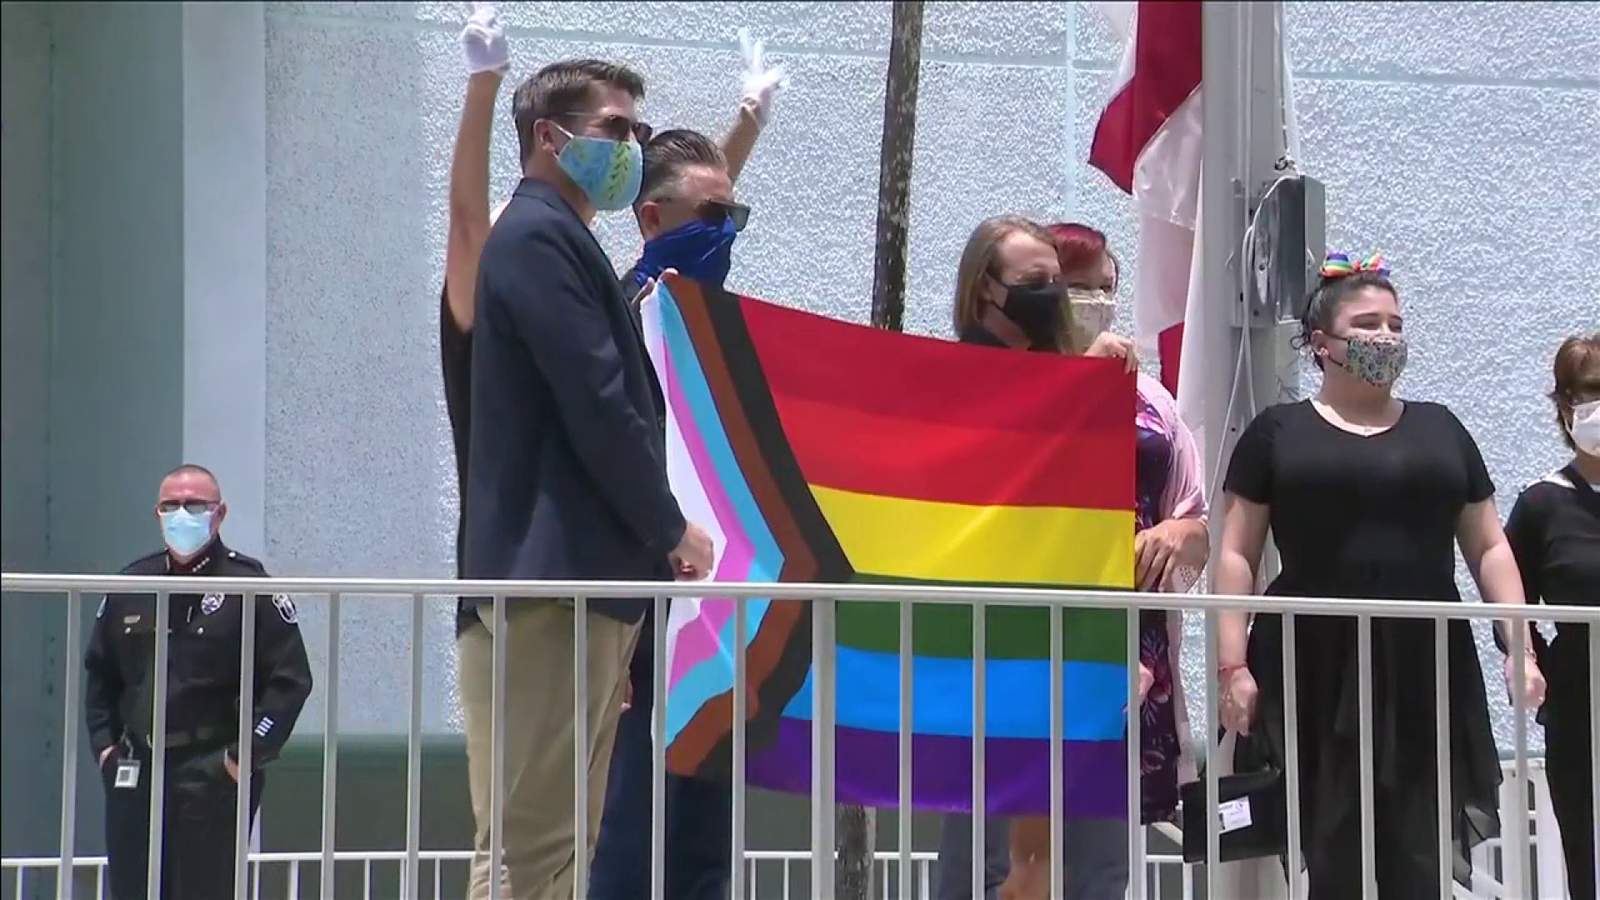 Miami-Dade LGBTQ community debating new version of rainbow pride flag